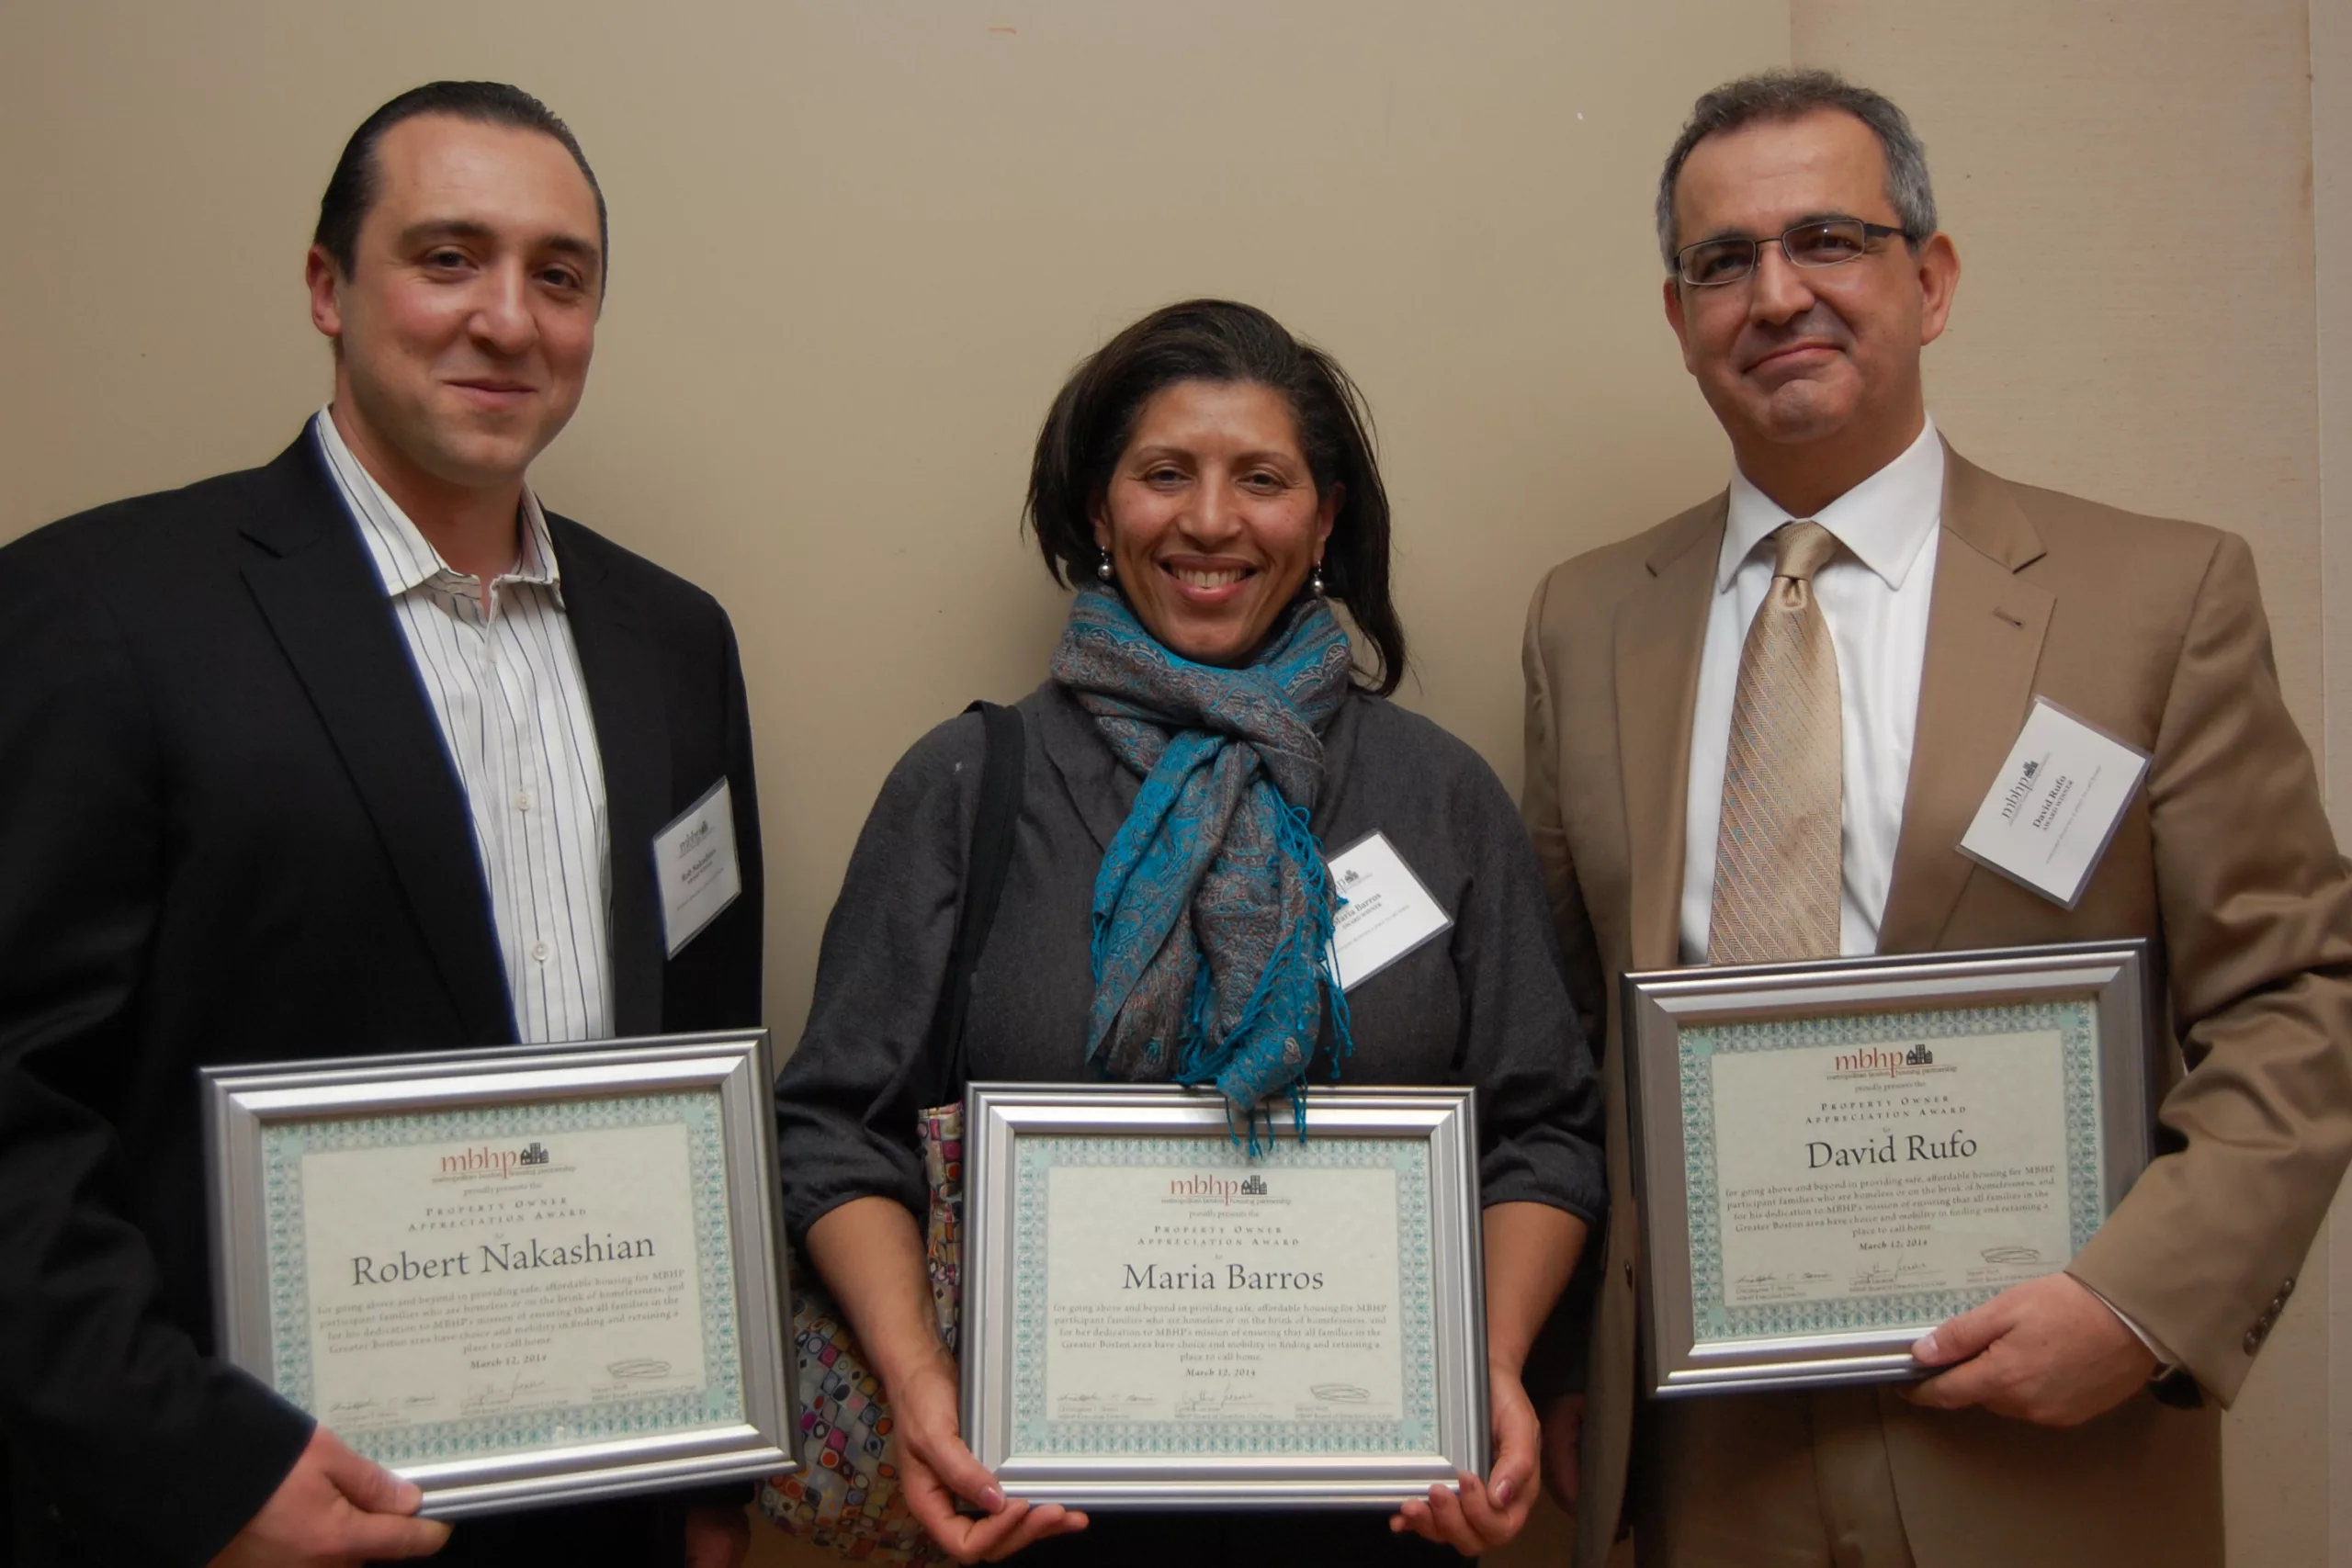 Robert Nakashian, Maria Barros and David Rufo, recipients of MBHP's Property Owner Appreciation Award